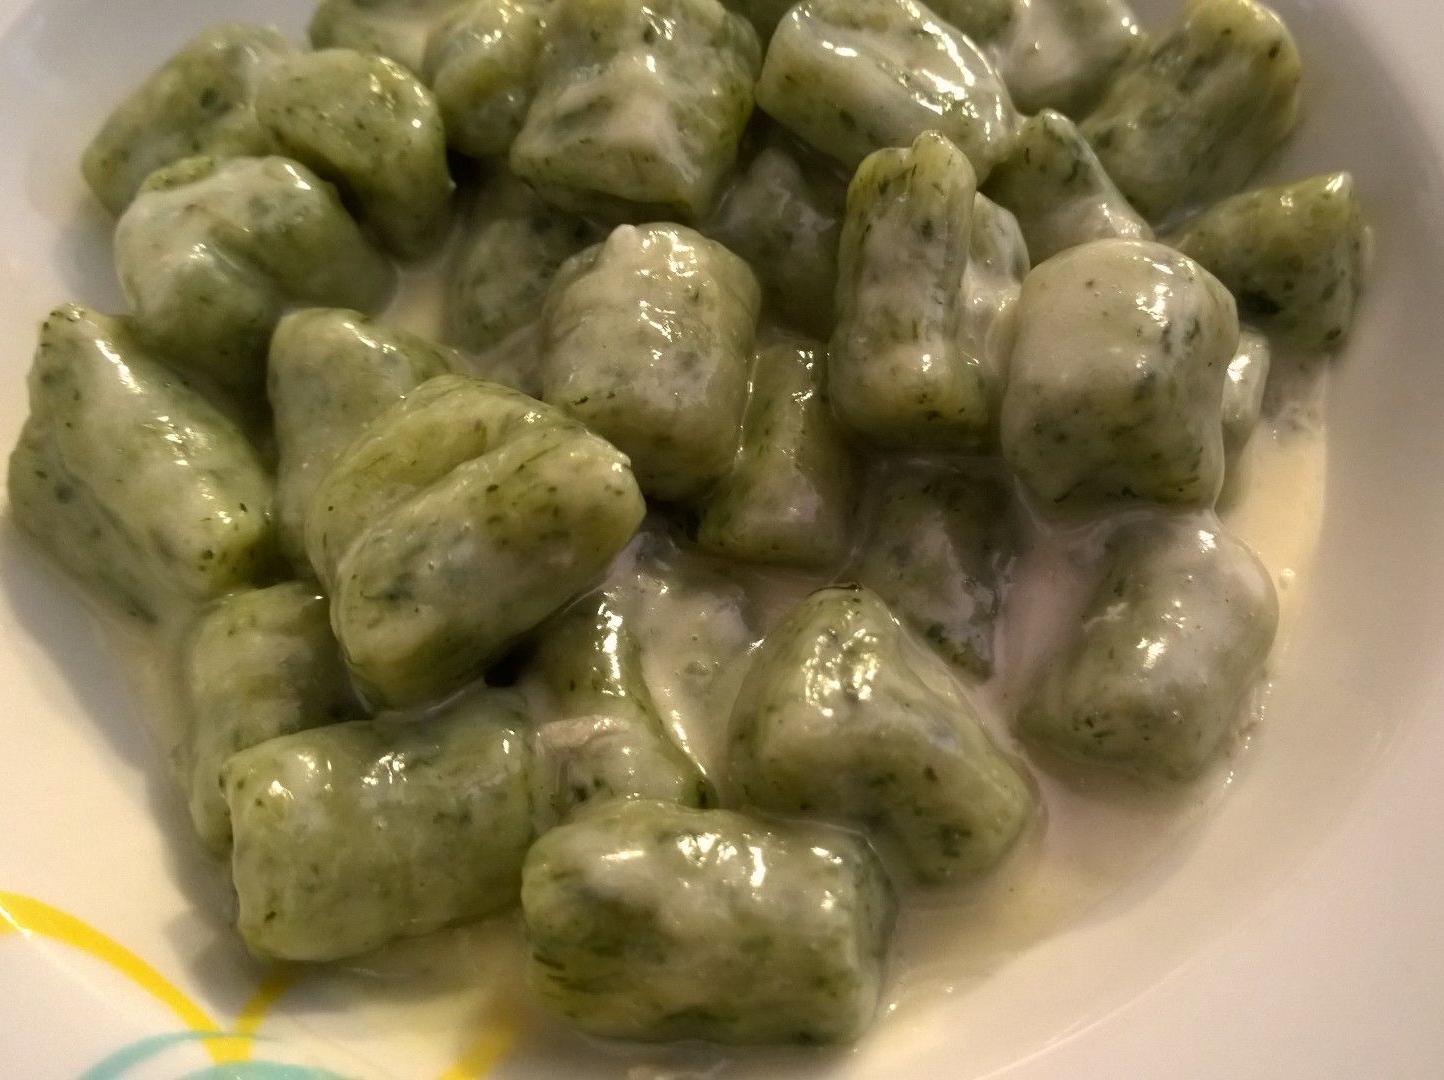 Ricetta gnocchi verdi in salsa di gorgonzola | Dolcidee